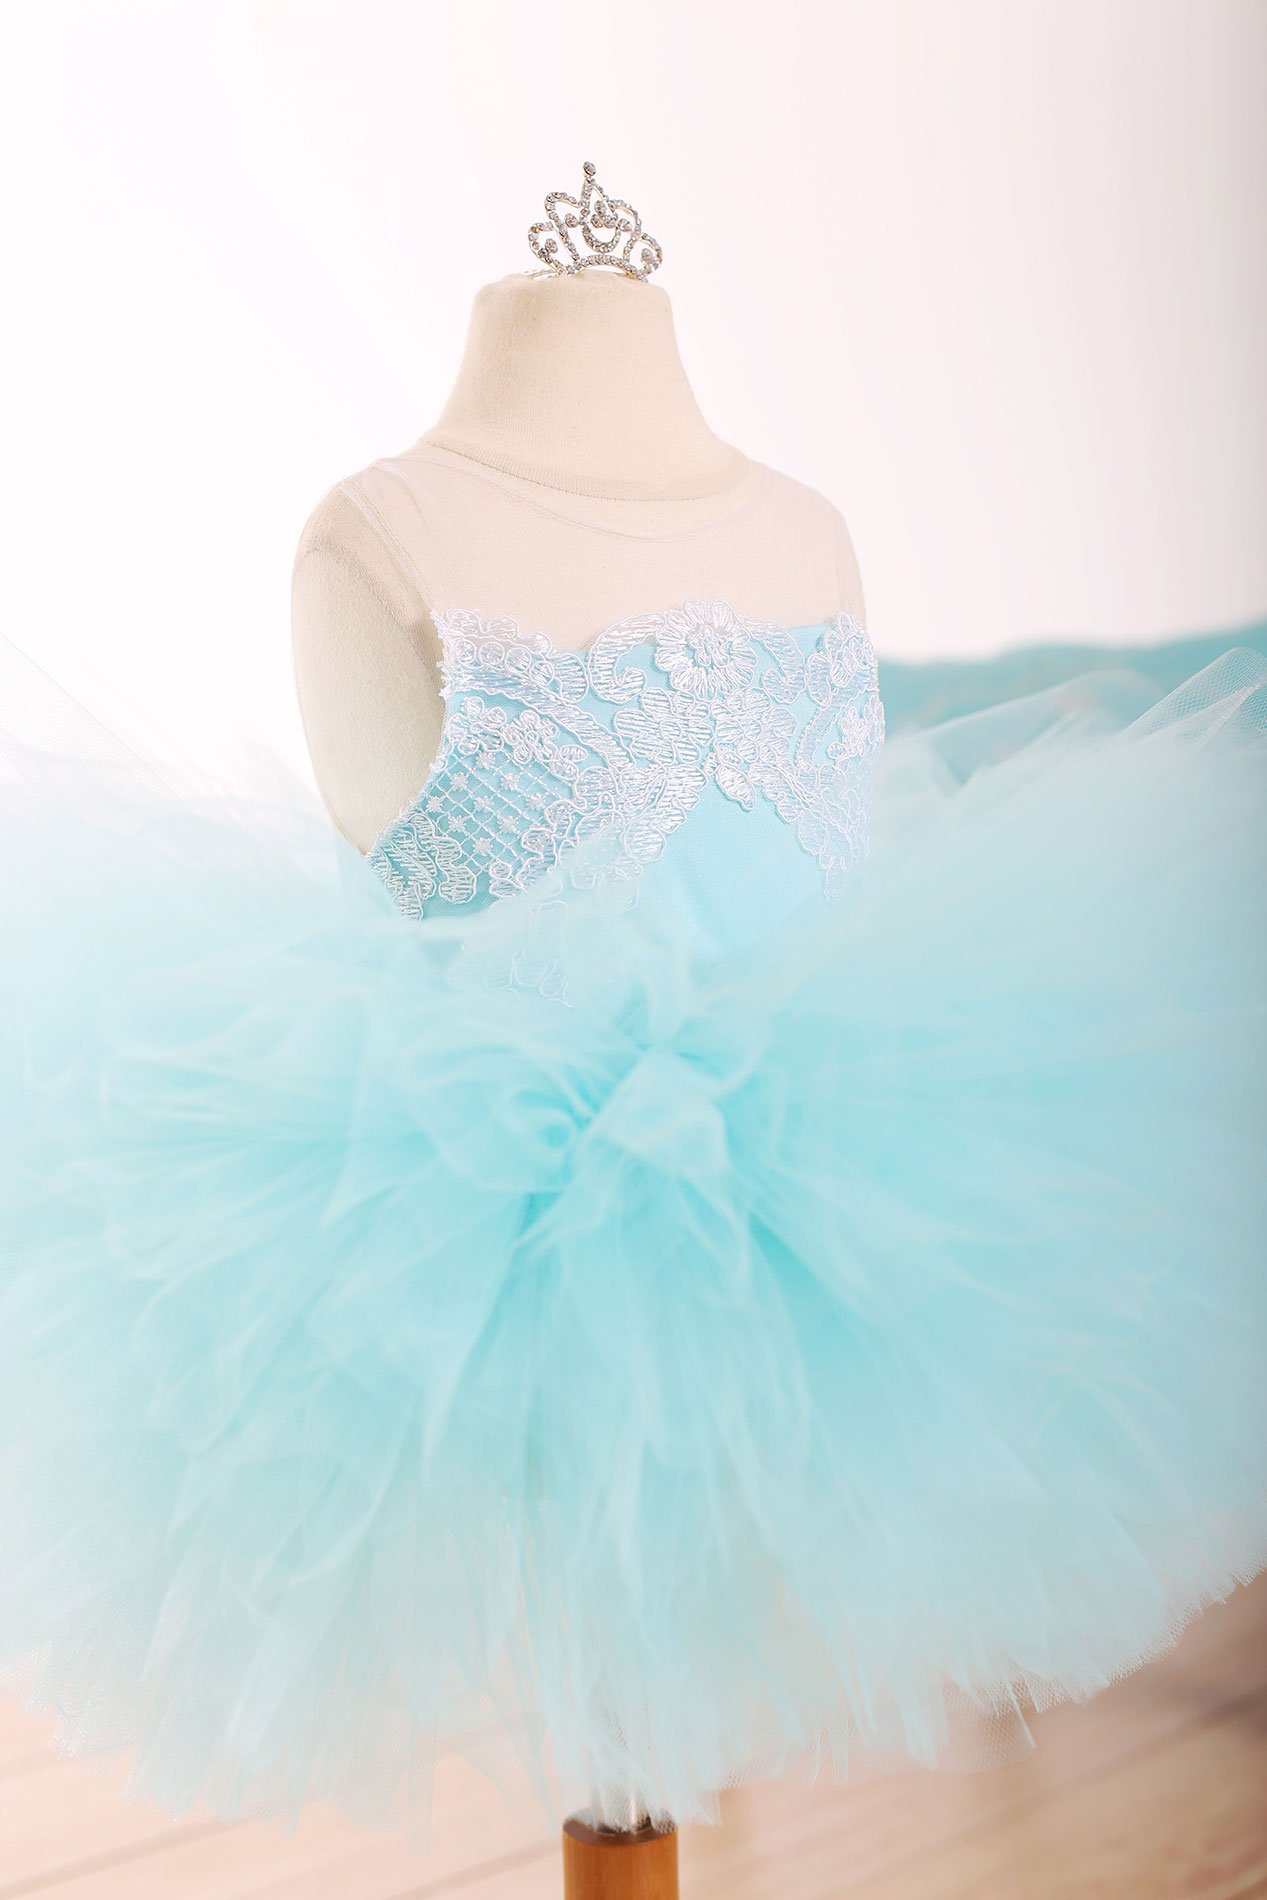 _aqua-blue-lace-dress-frozen-IMG_7194AwebO.jpg